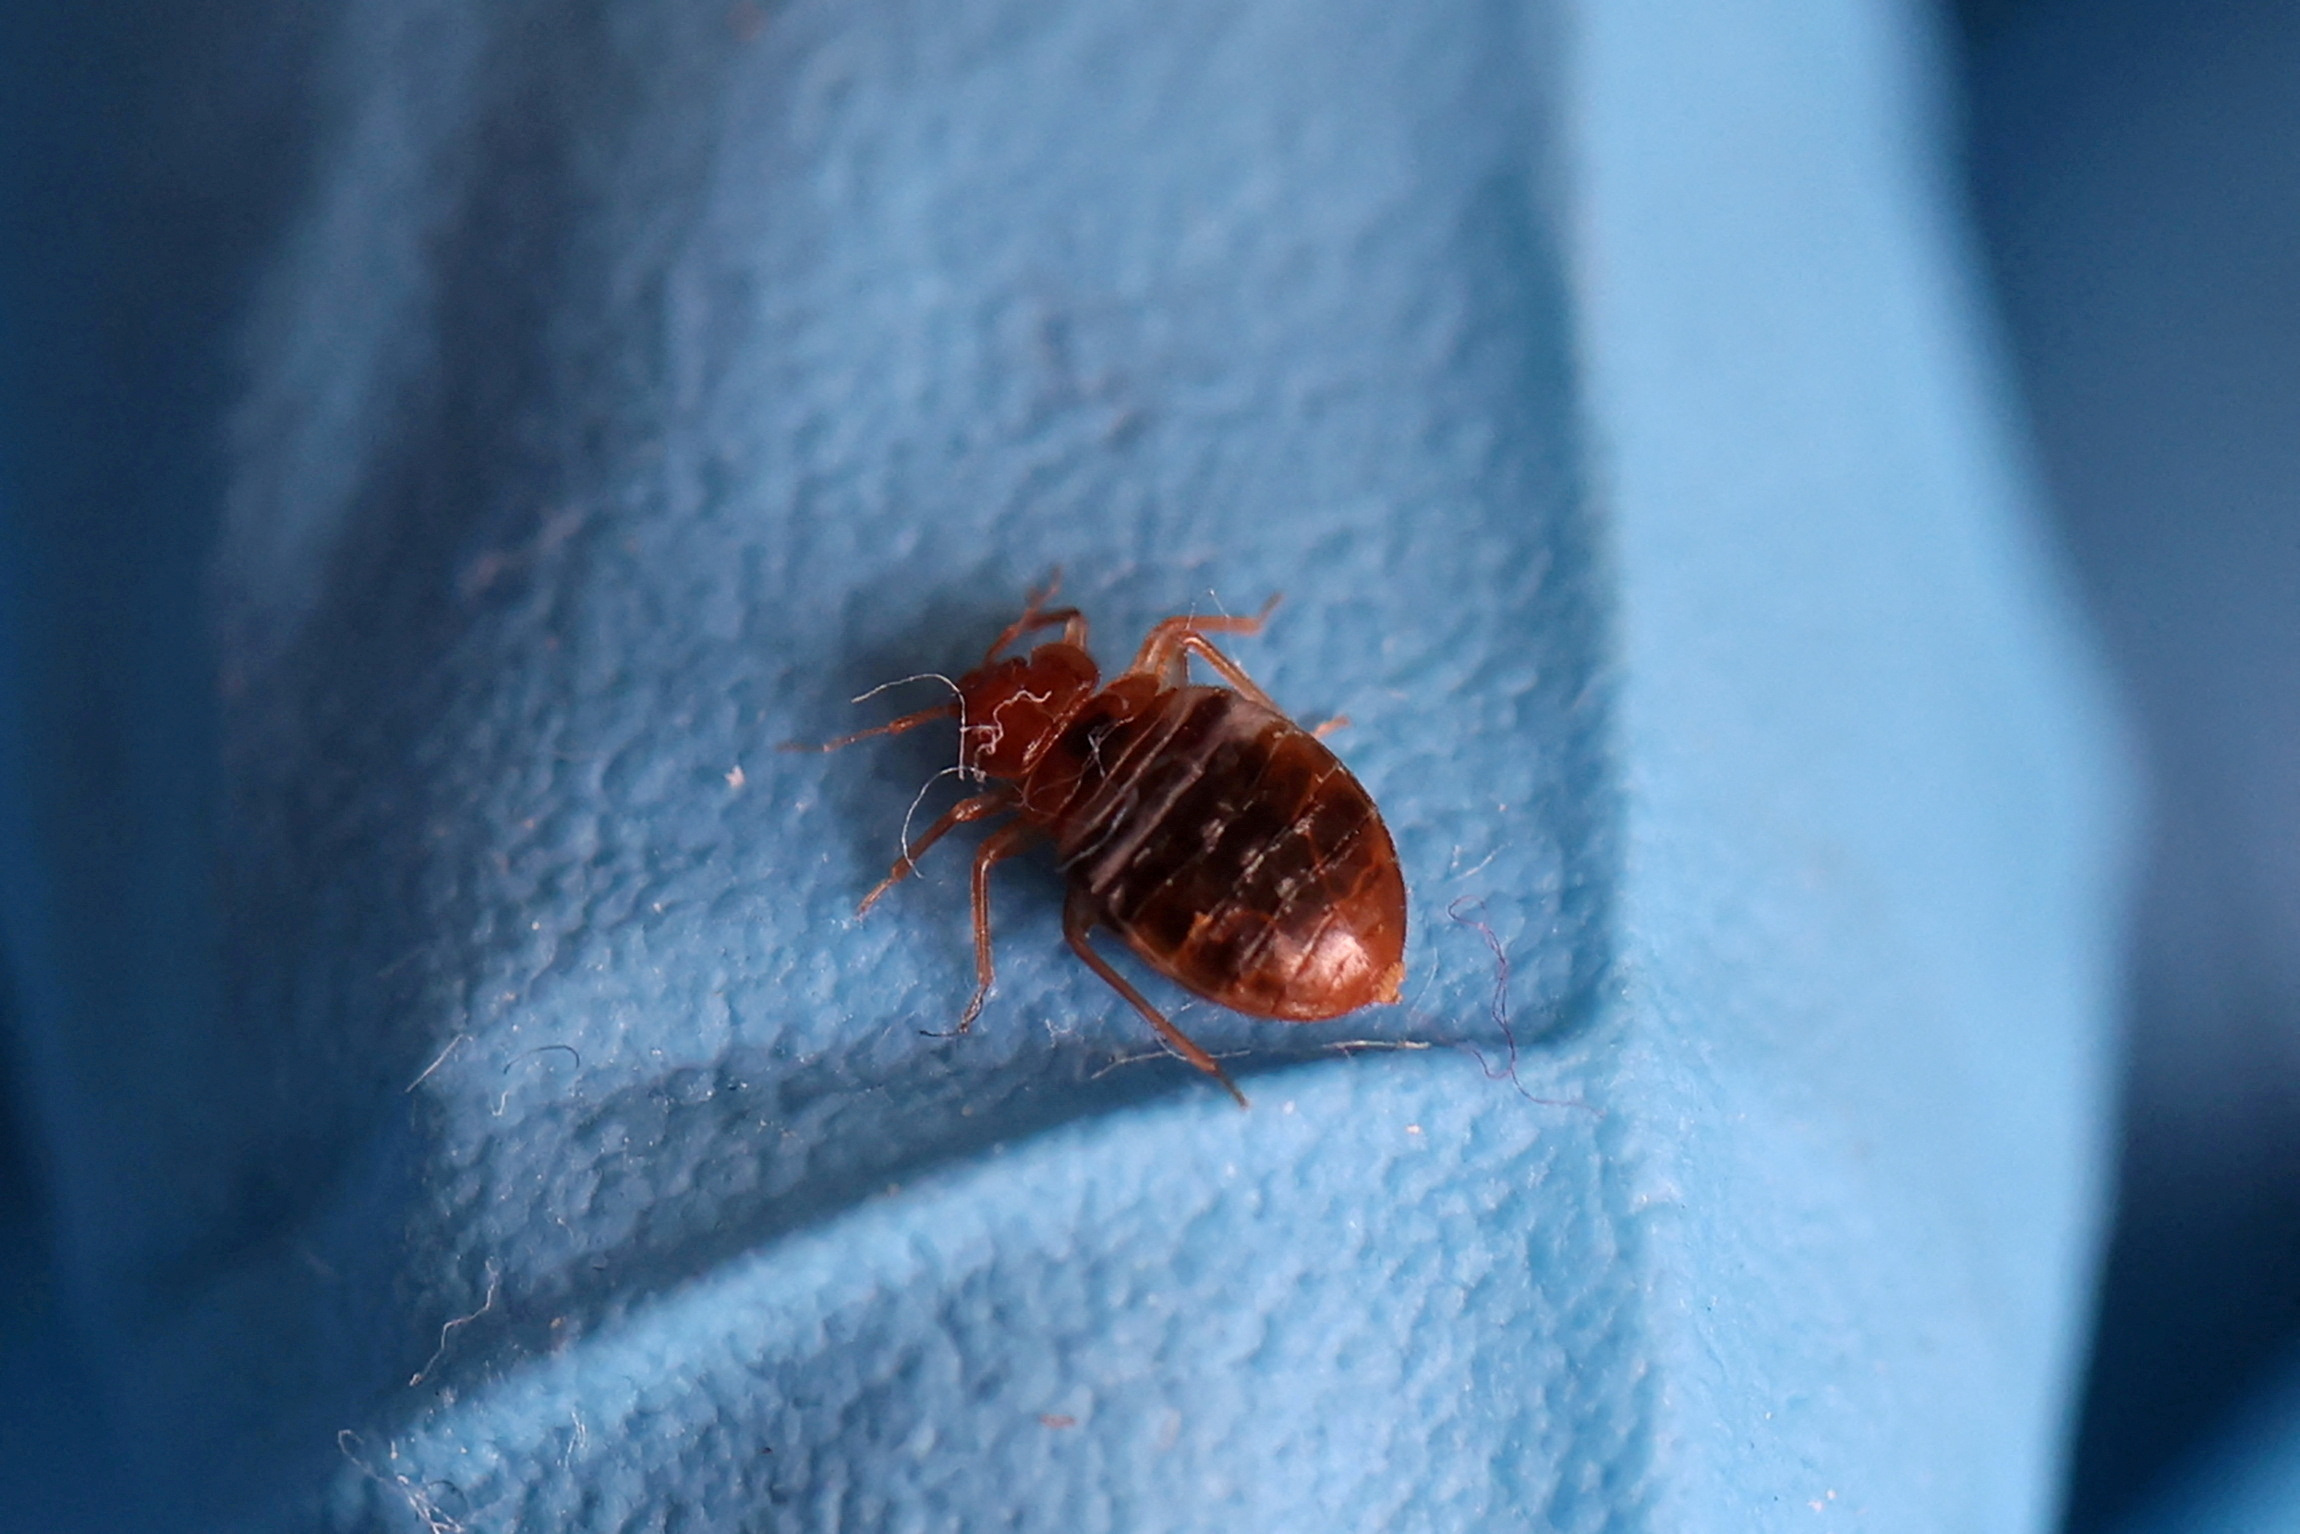 South Korea successfully tackles a severe bedbug infestation like never before